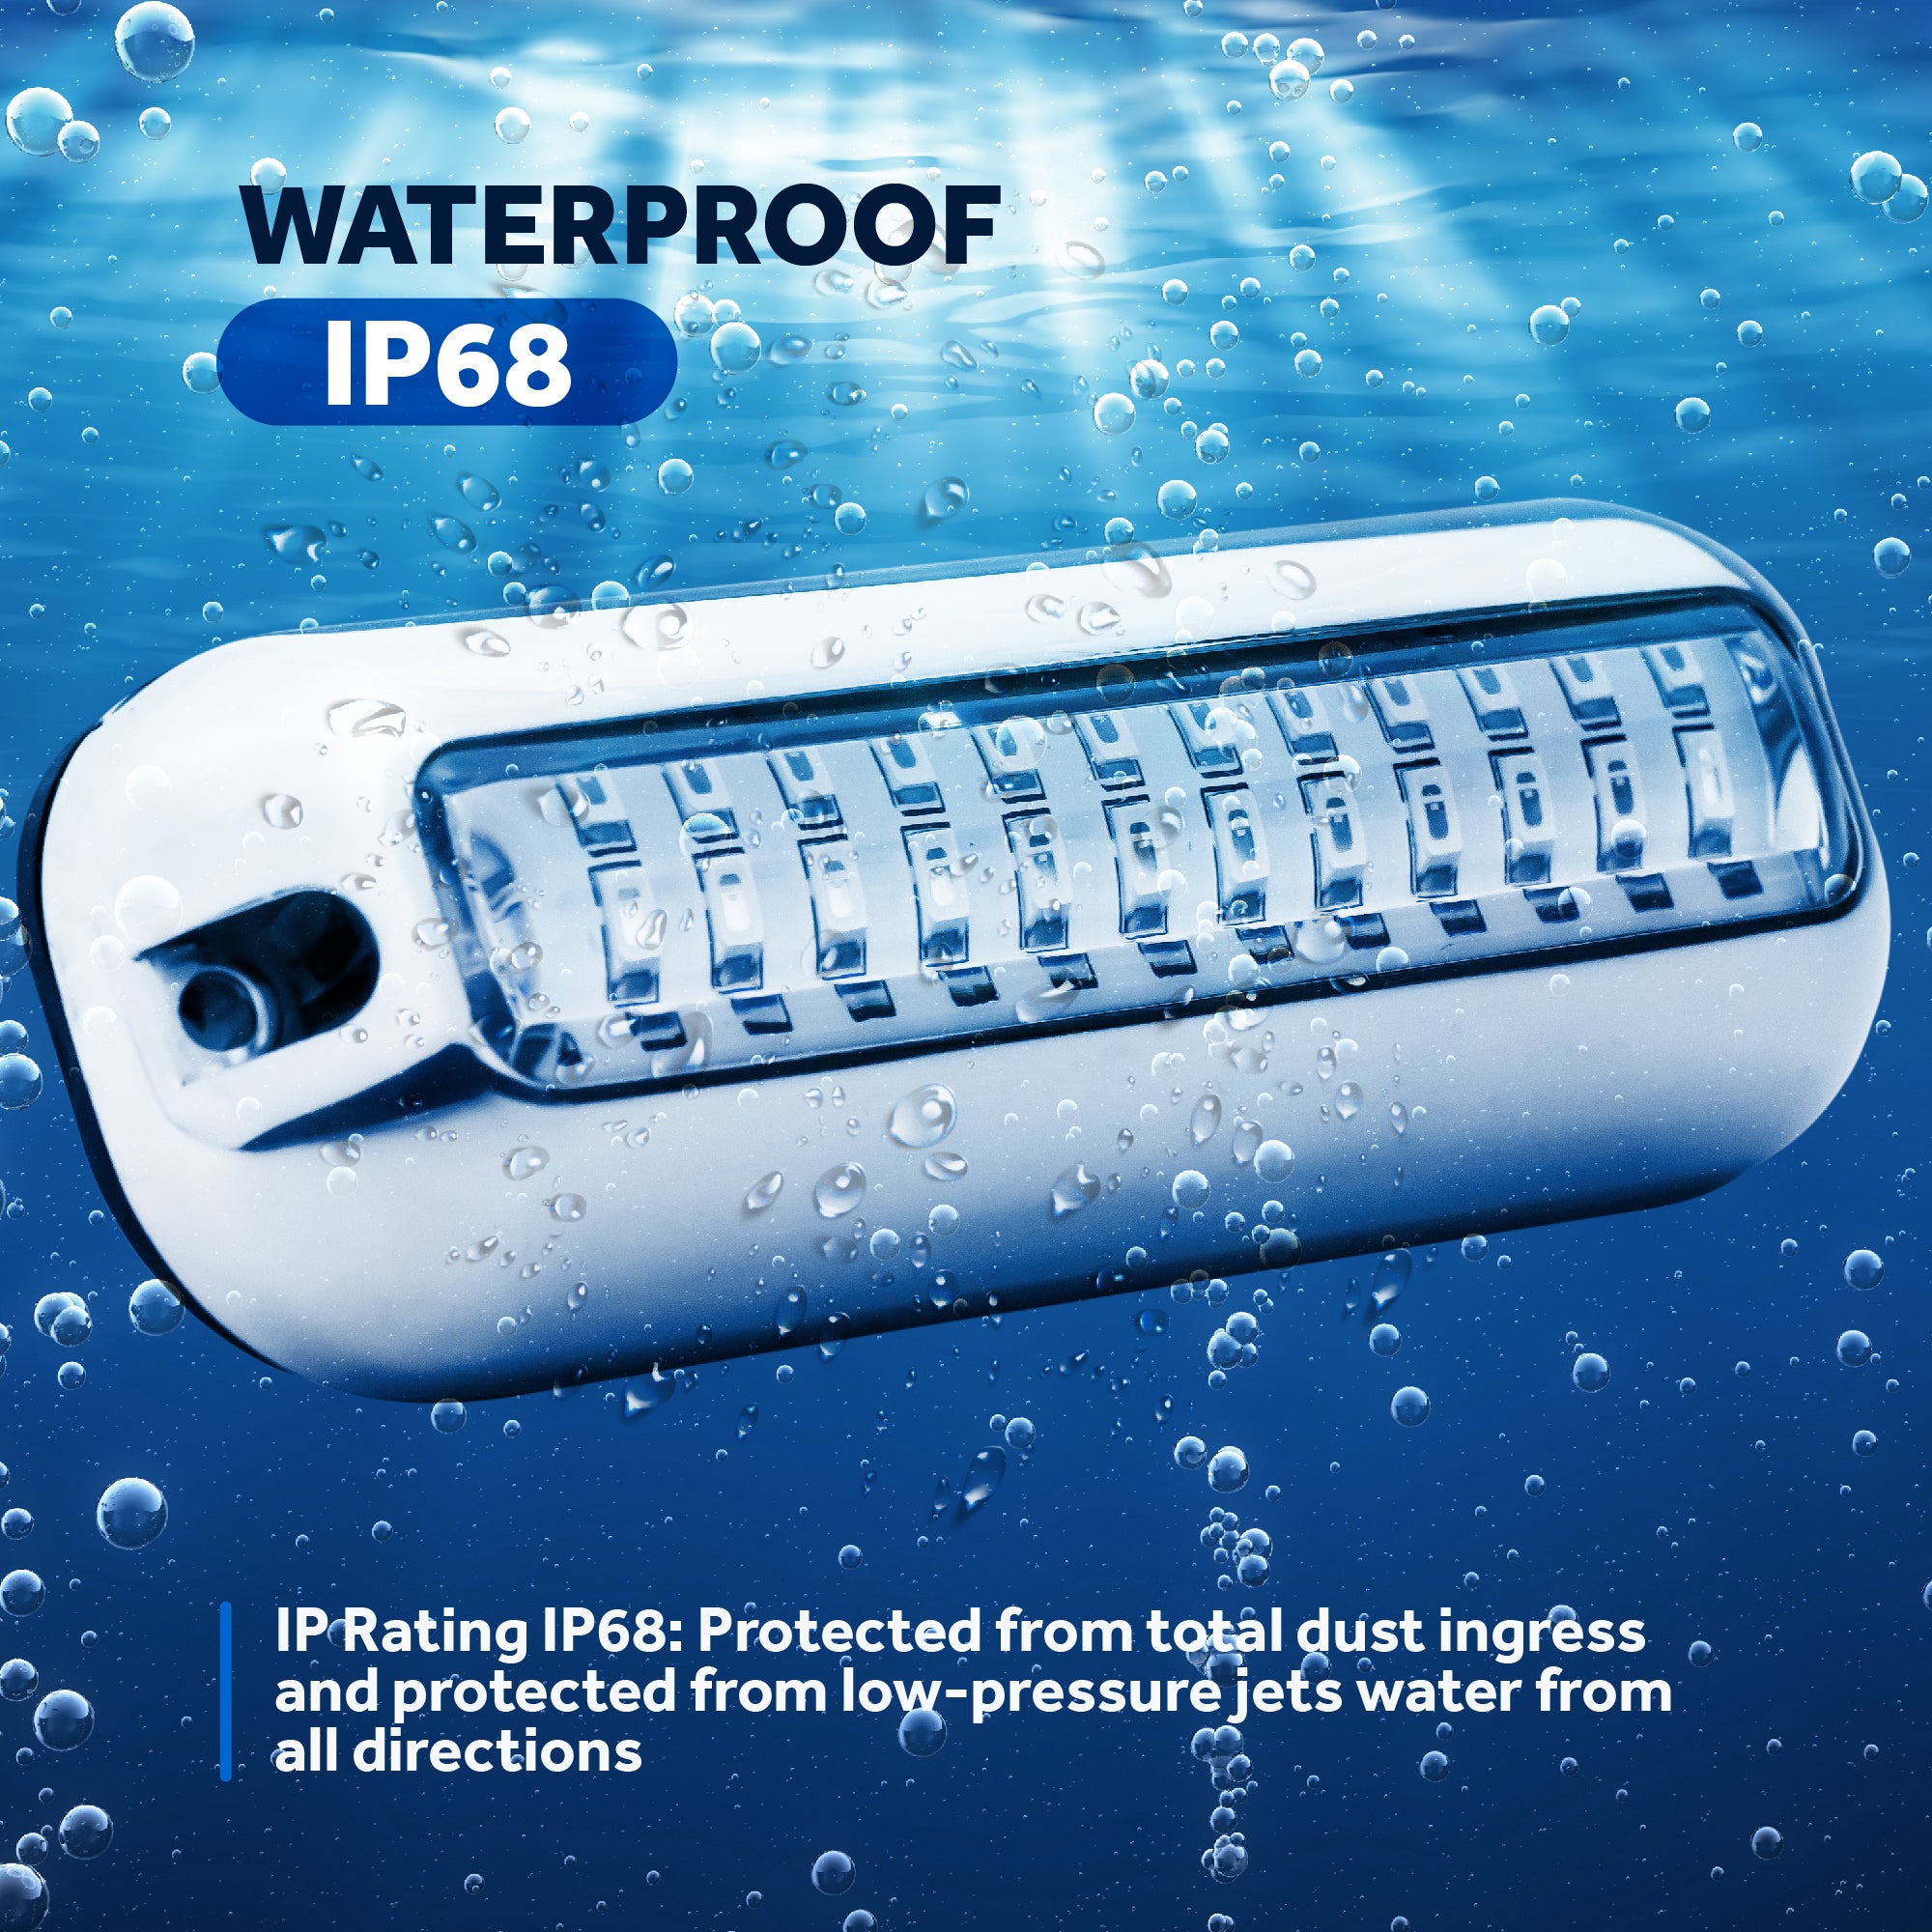 Underwater Transom Light, Stainless Steel, Blue LED, 2-pack - FO4136-M2